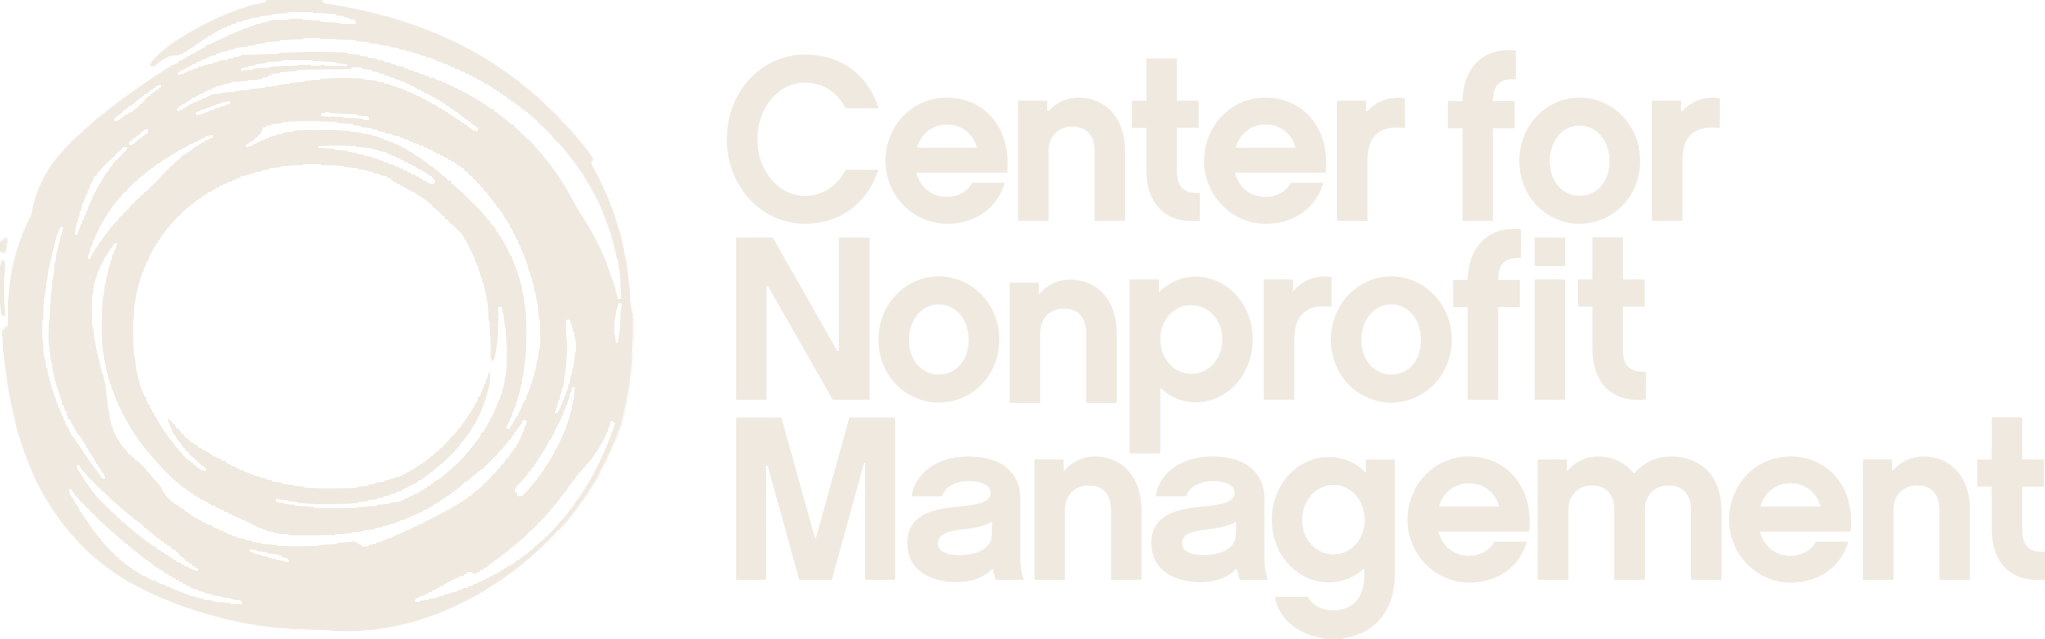 Center for Nonprofit Management logo